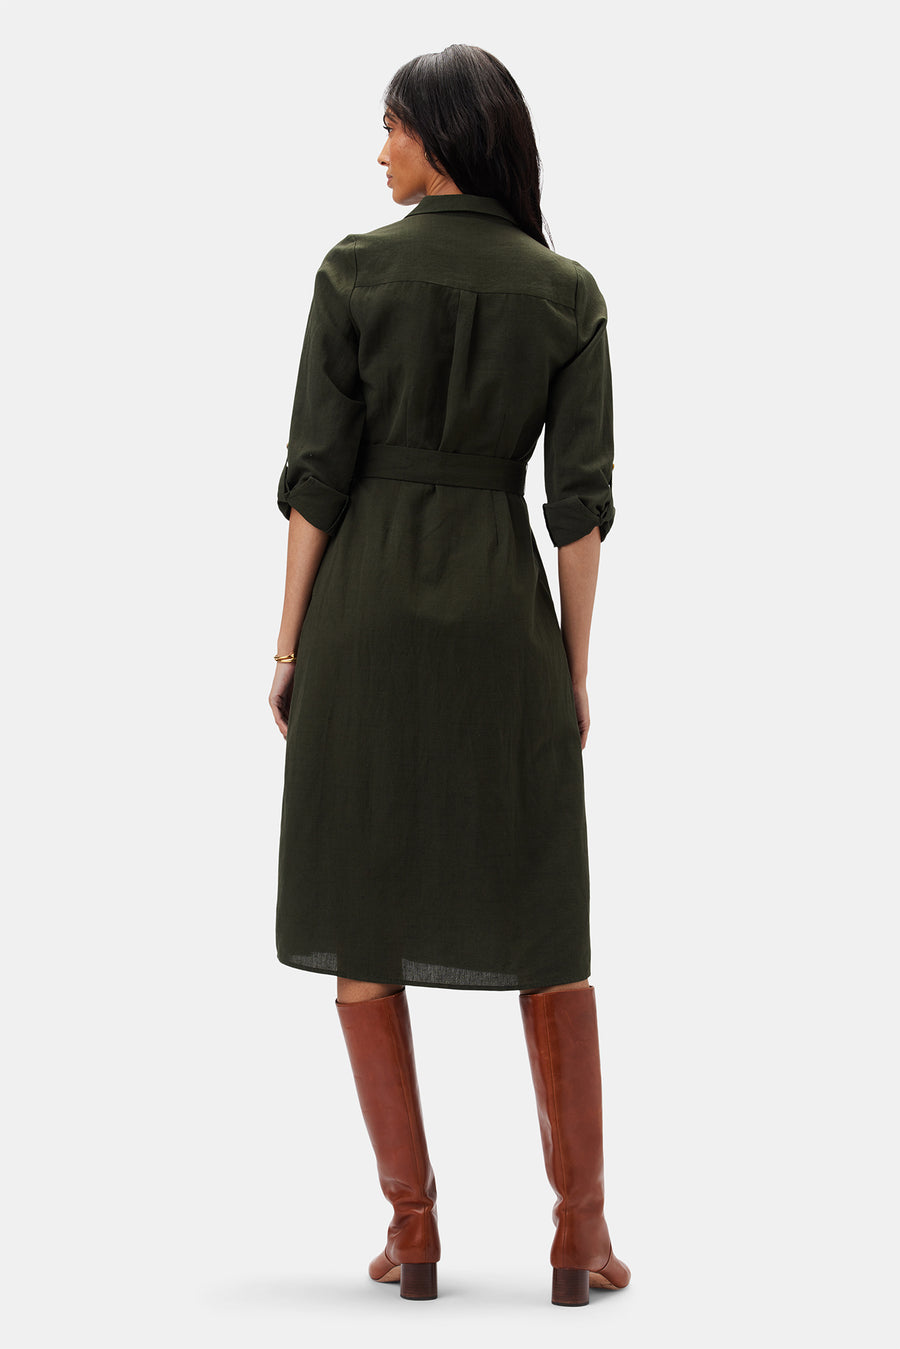 Joyce Cotton Linen Dress - Olive Green